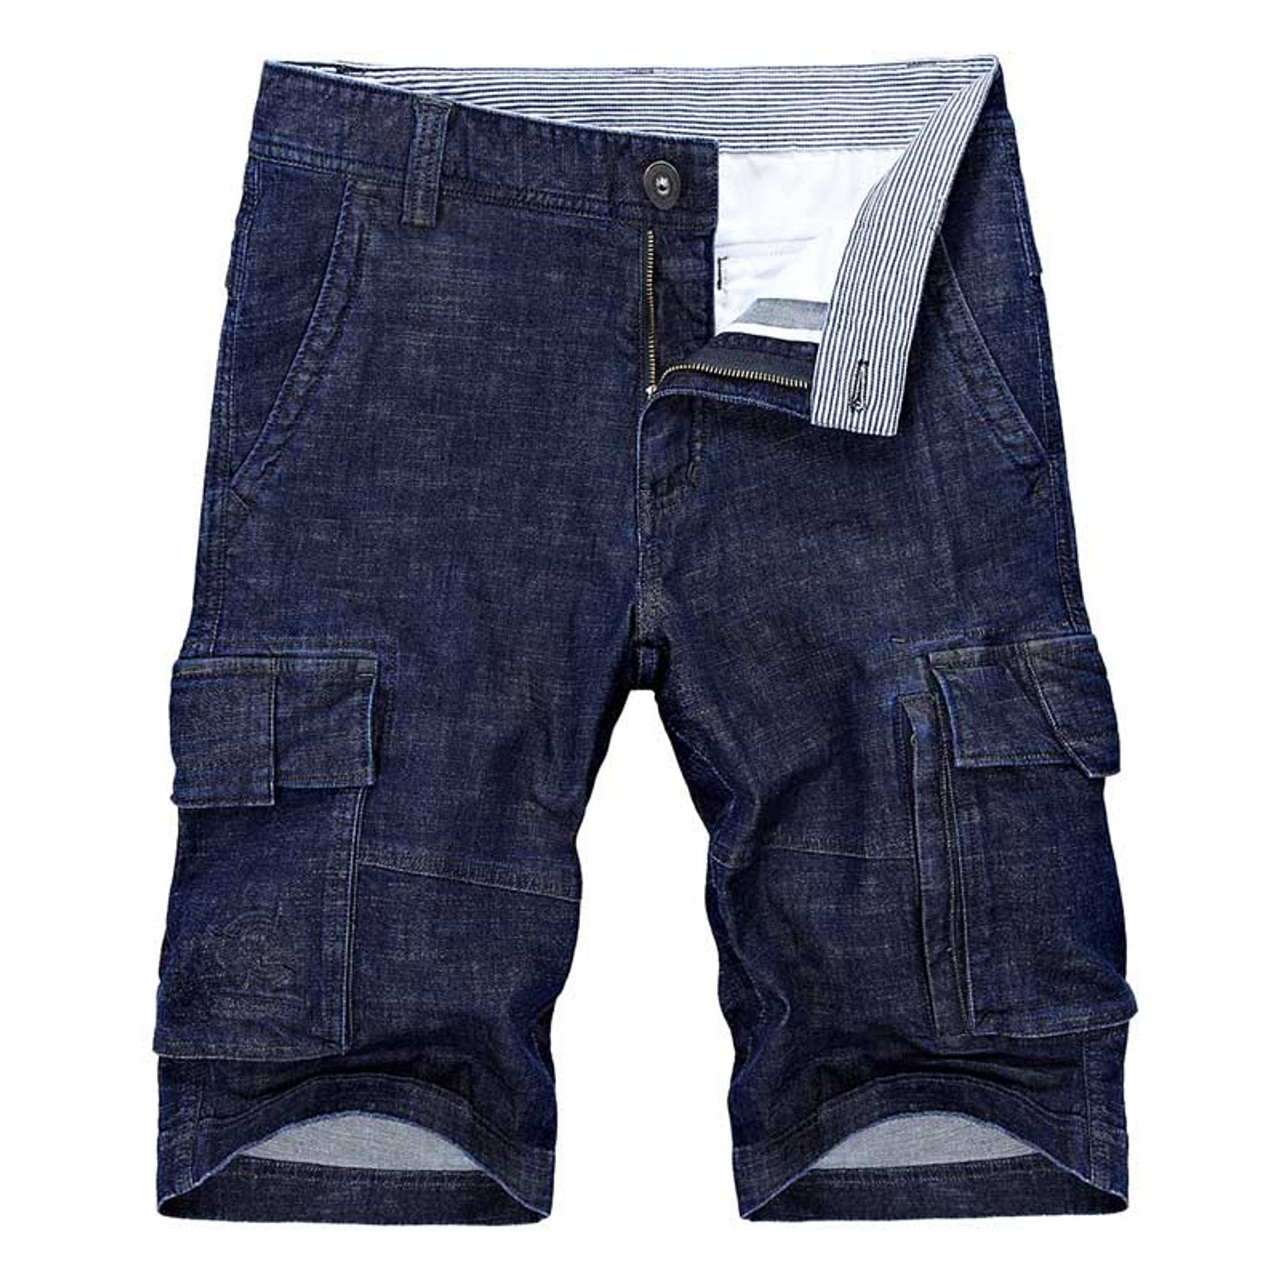 MP 064] Denim Men Jeans Shorts Jean Short Pants Ripped Casual Trendy |  Shopee Malaysia